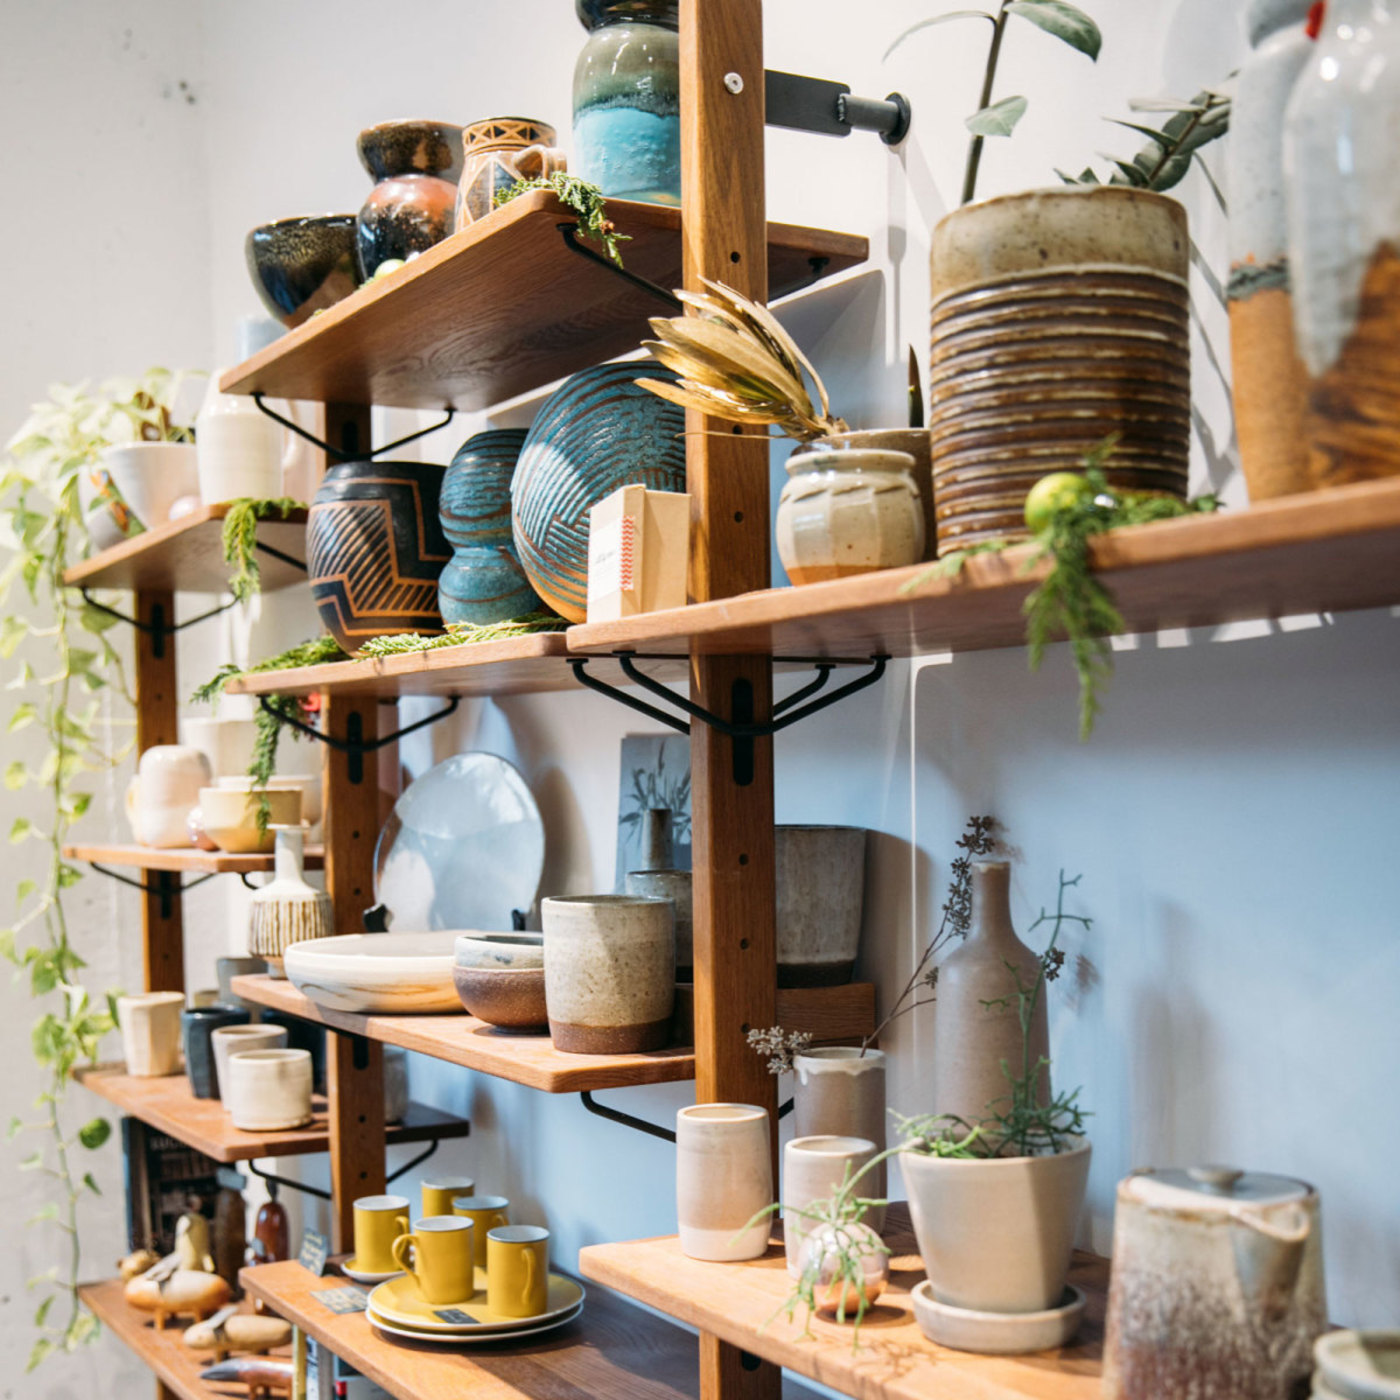 ceramics pottery on shelf with plants